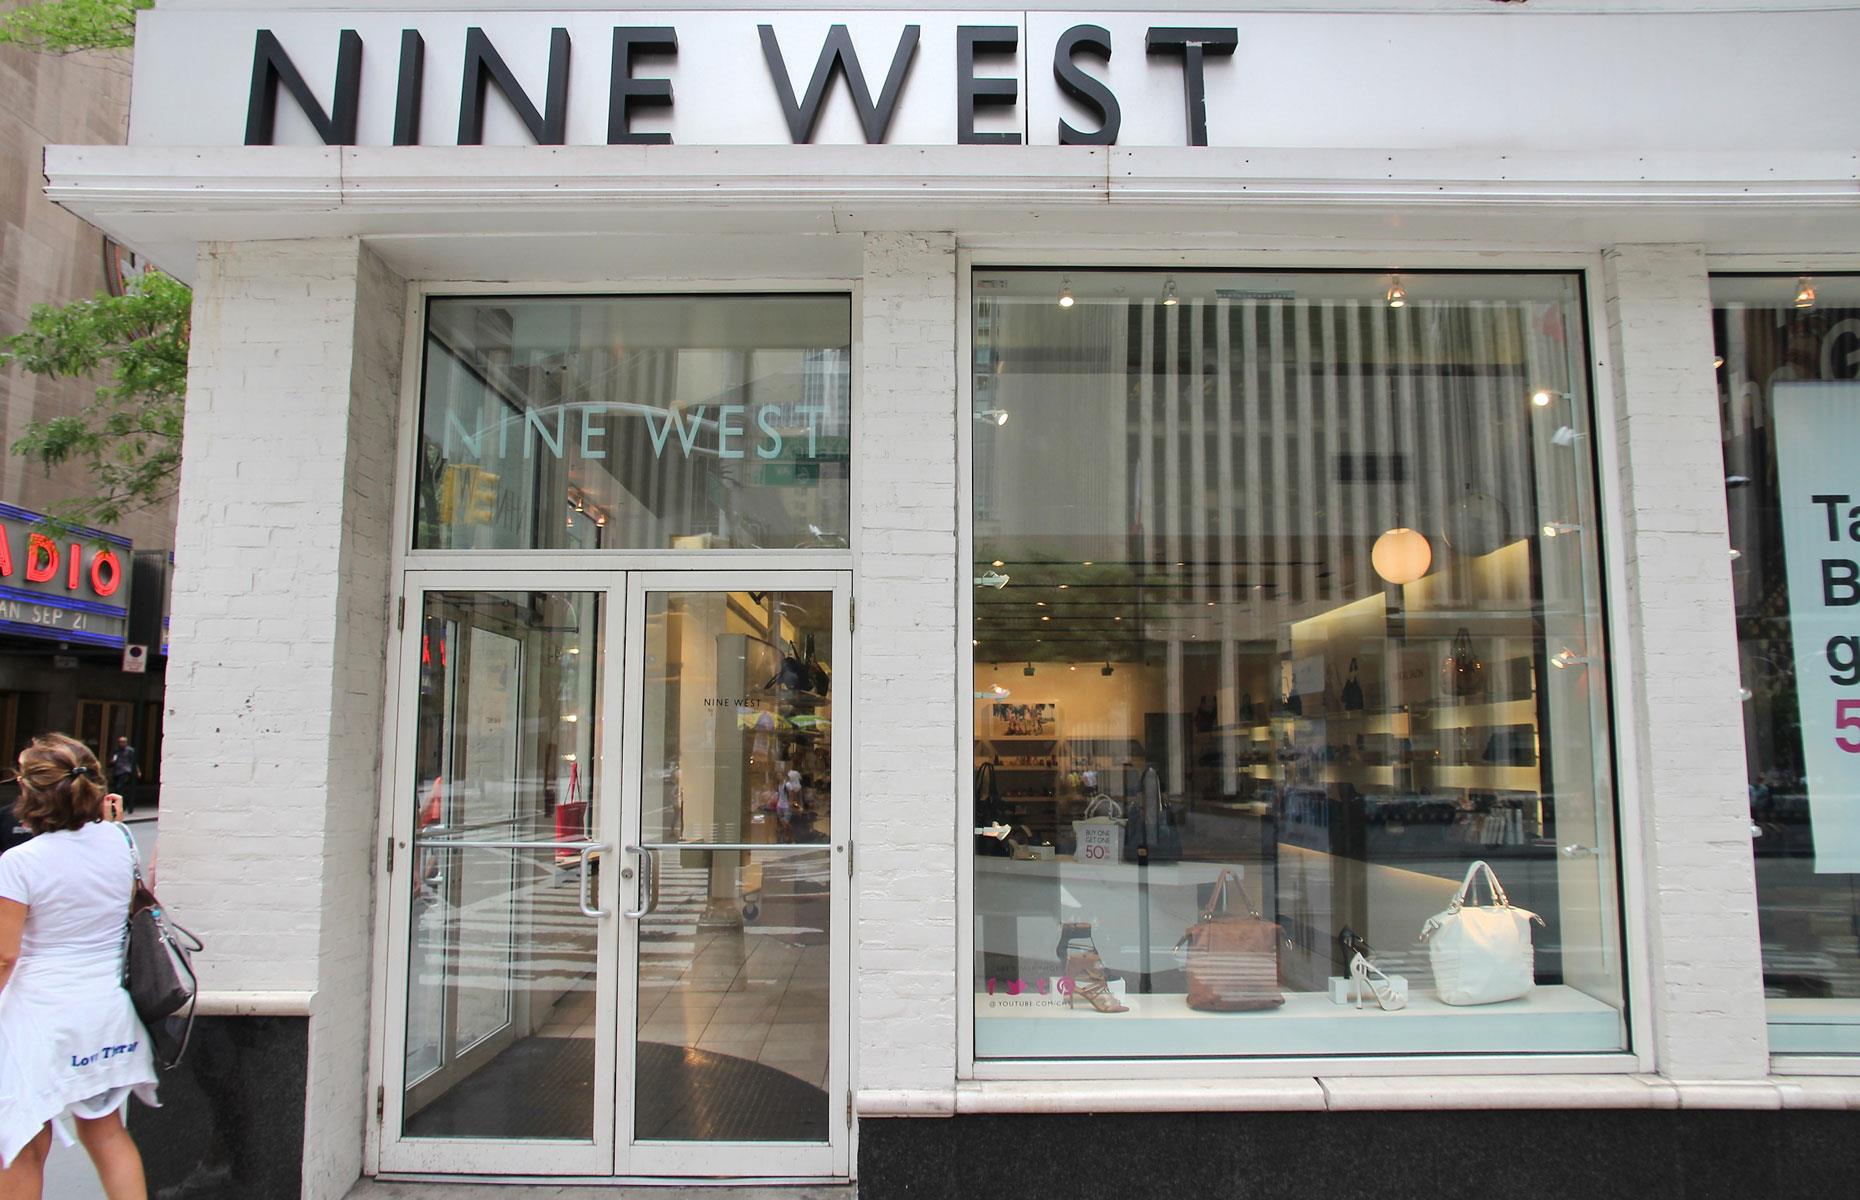 Nine West: 71 stores